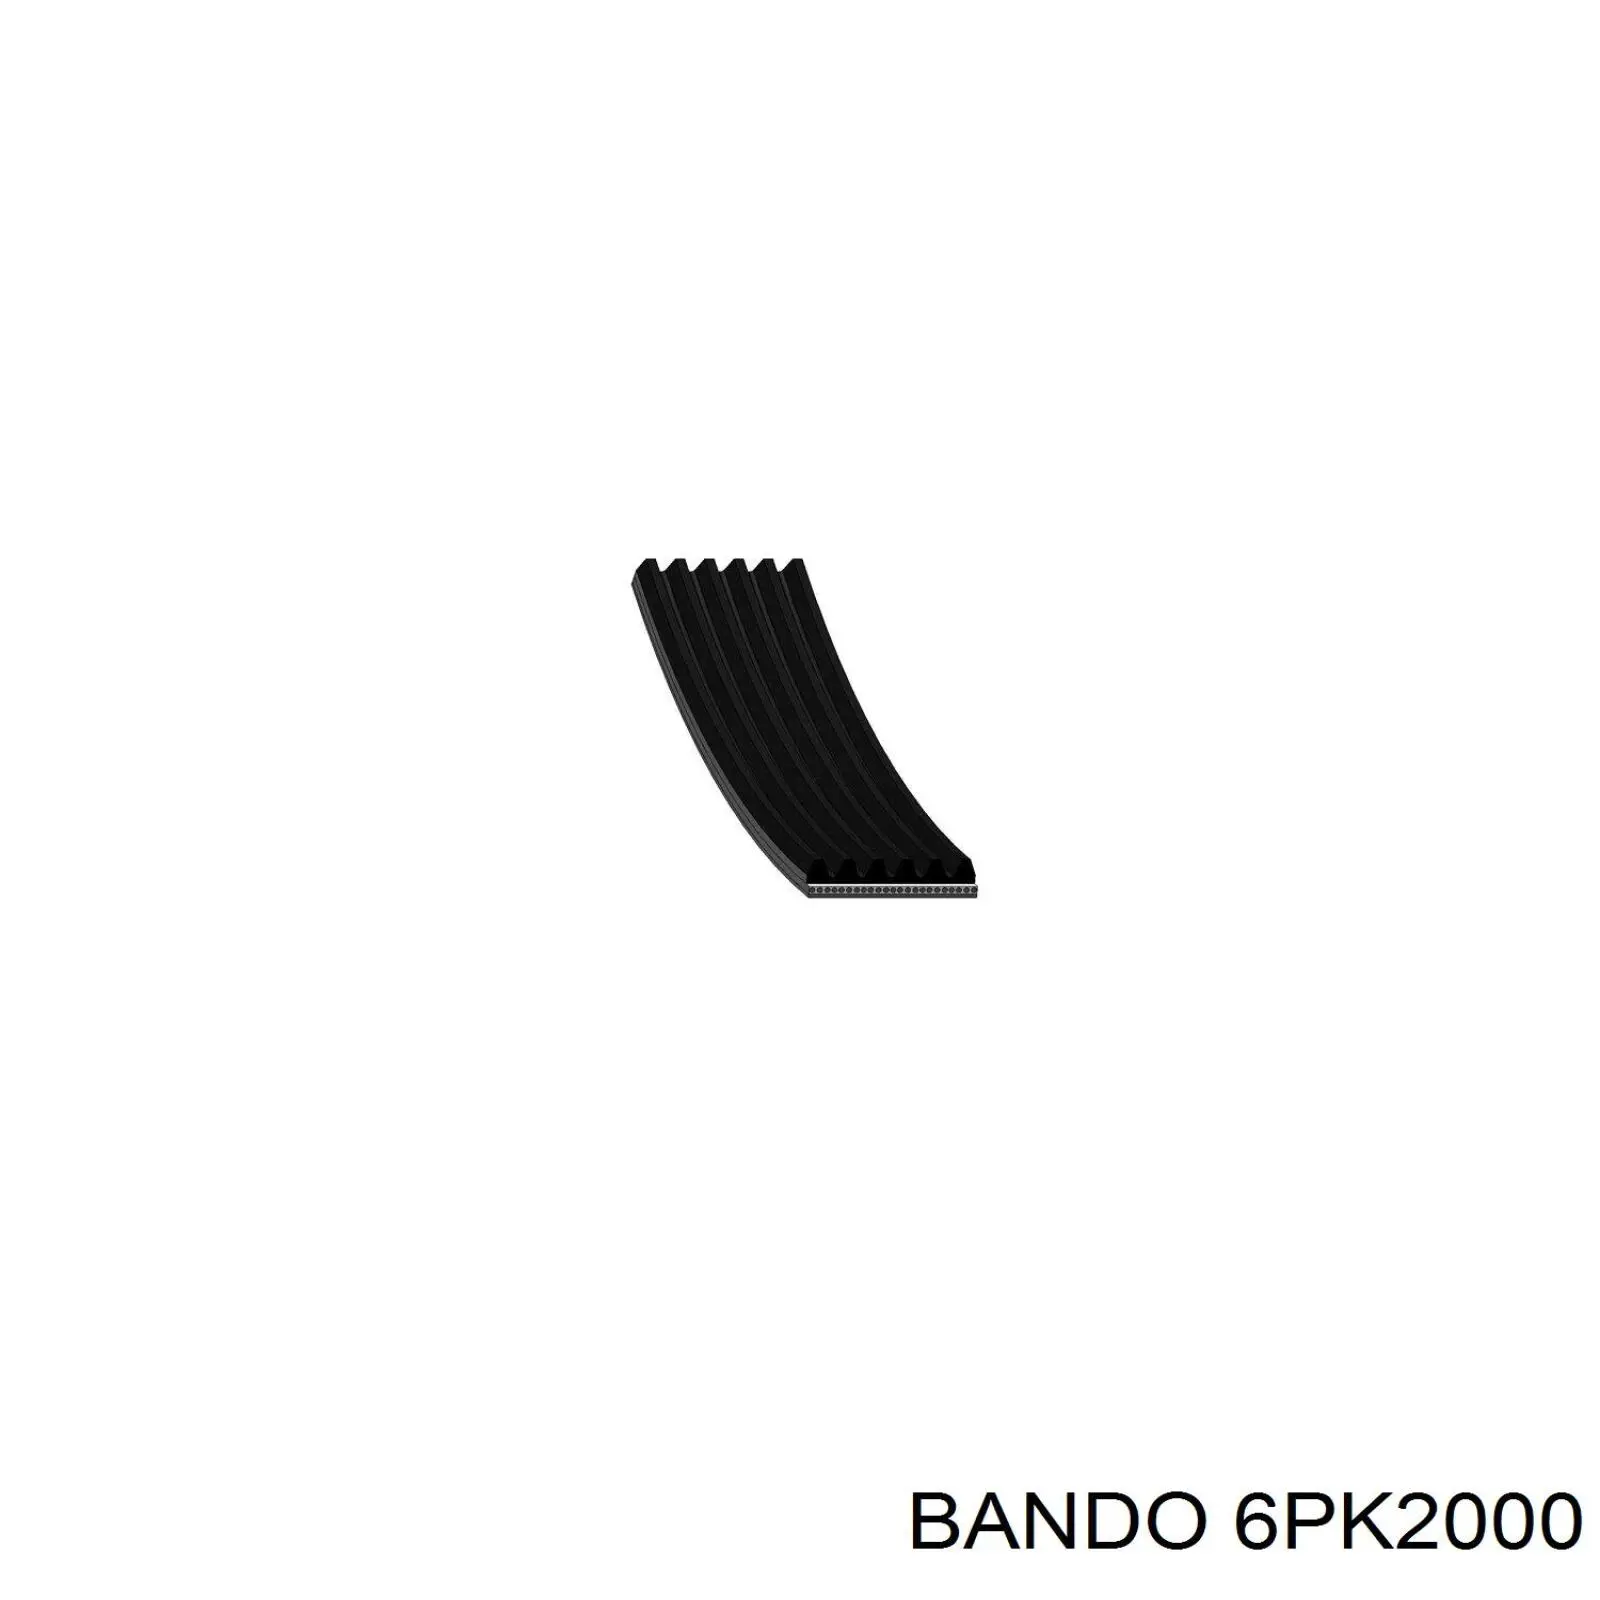 6PK2000 Bando correa trapezoidal